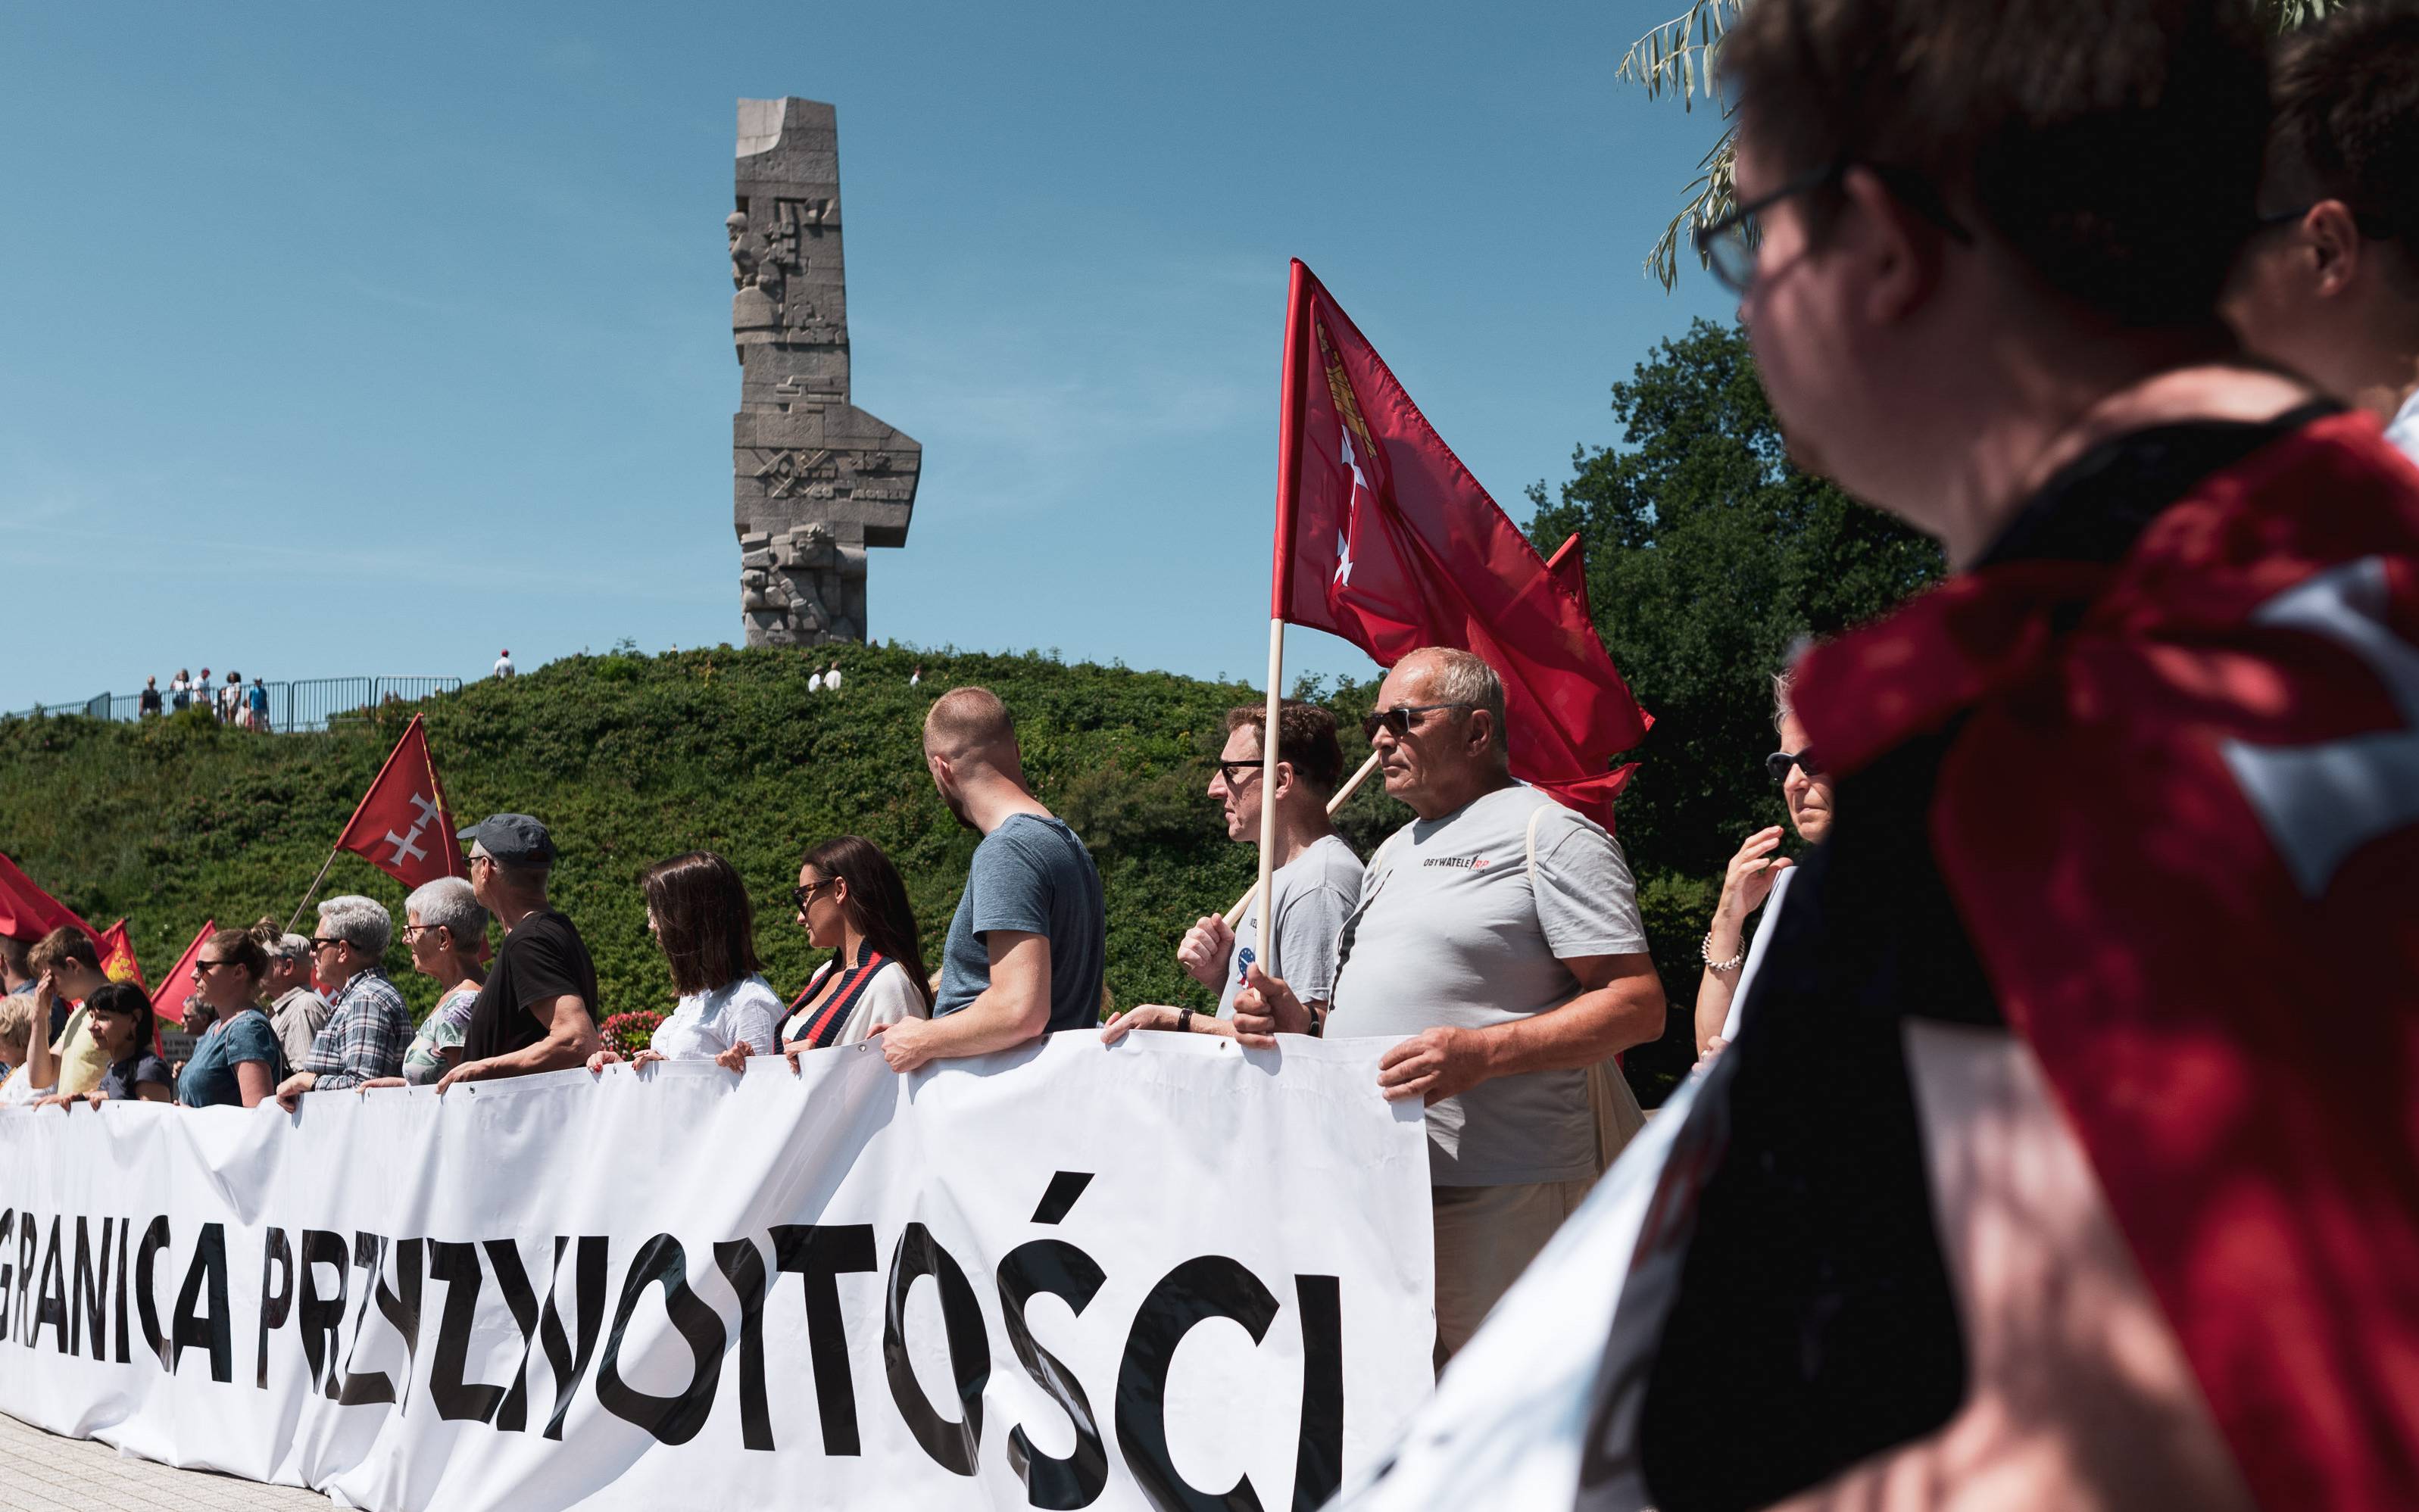 29.06.2019 Gdansk . Westerplatte . Demonstracja " Gdansk broni Westerplatte " Obywateli RP .
Fot. Martyna Niecko / Agencja Gazeta